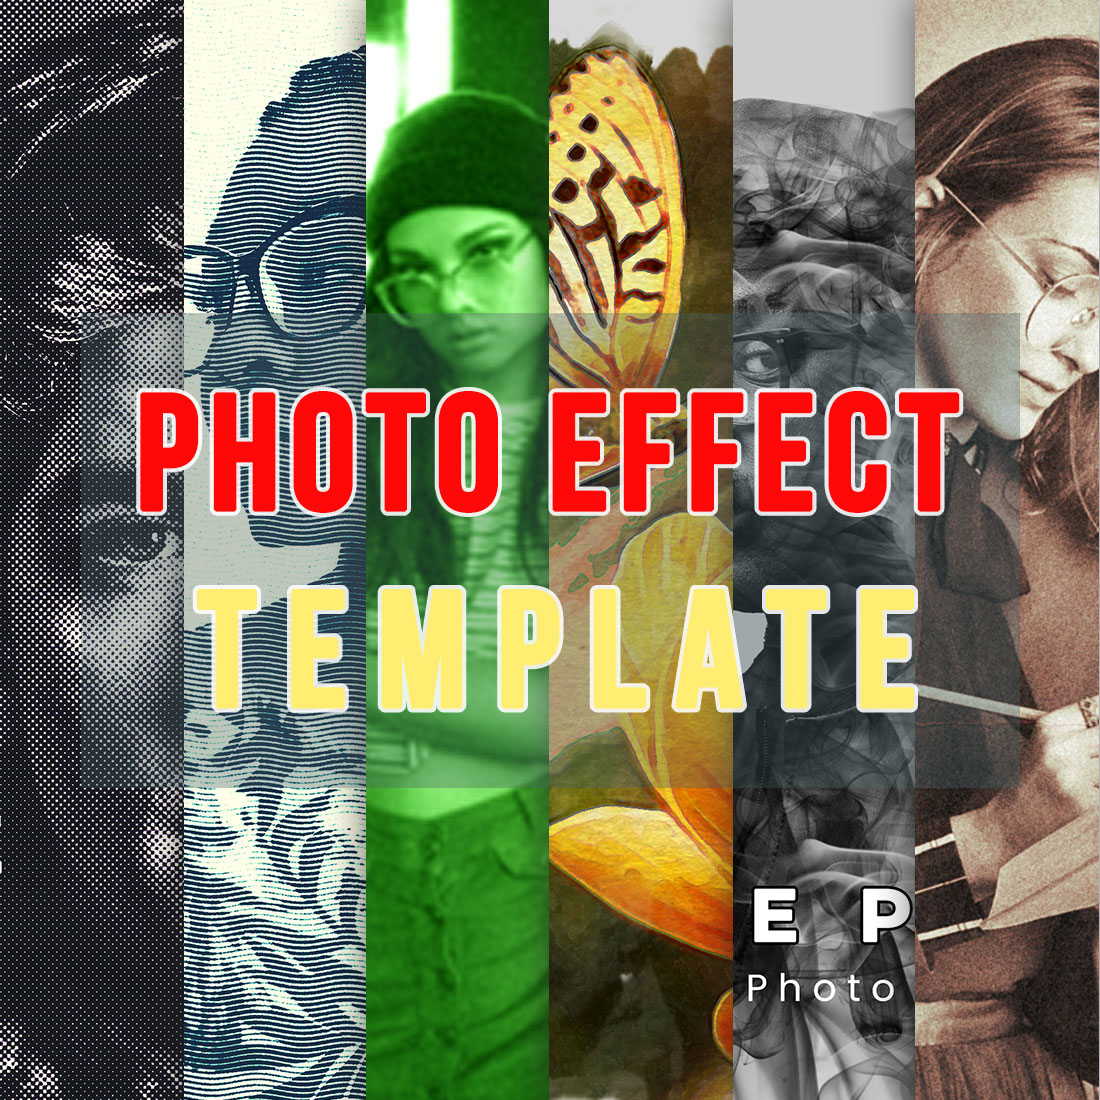 6 Photoshop Effect Bundle cover image.